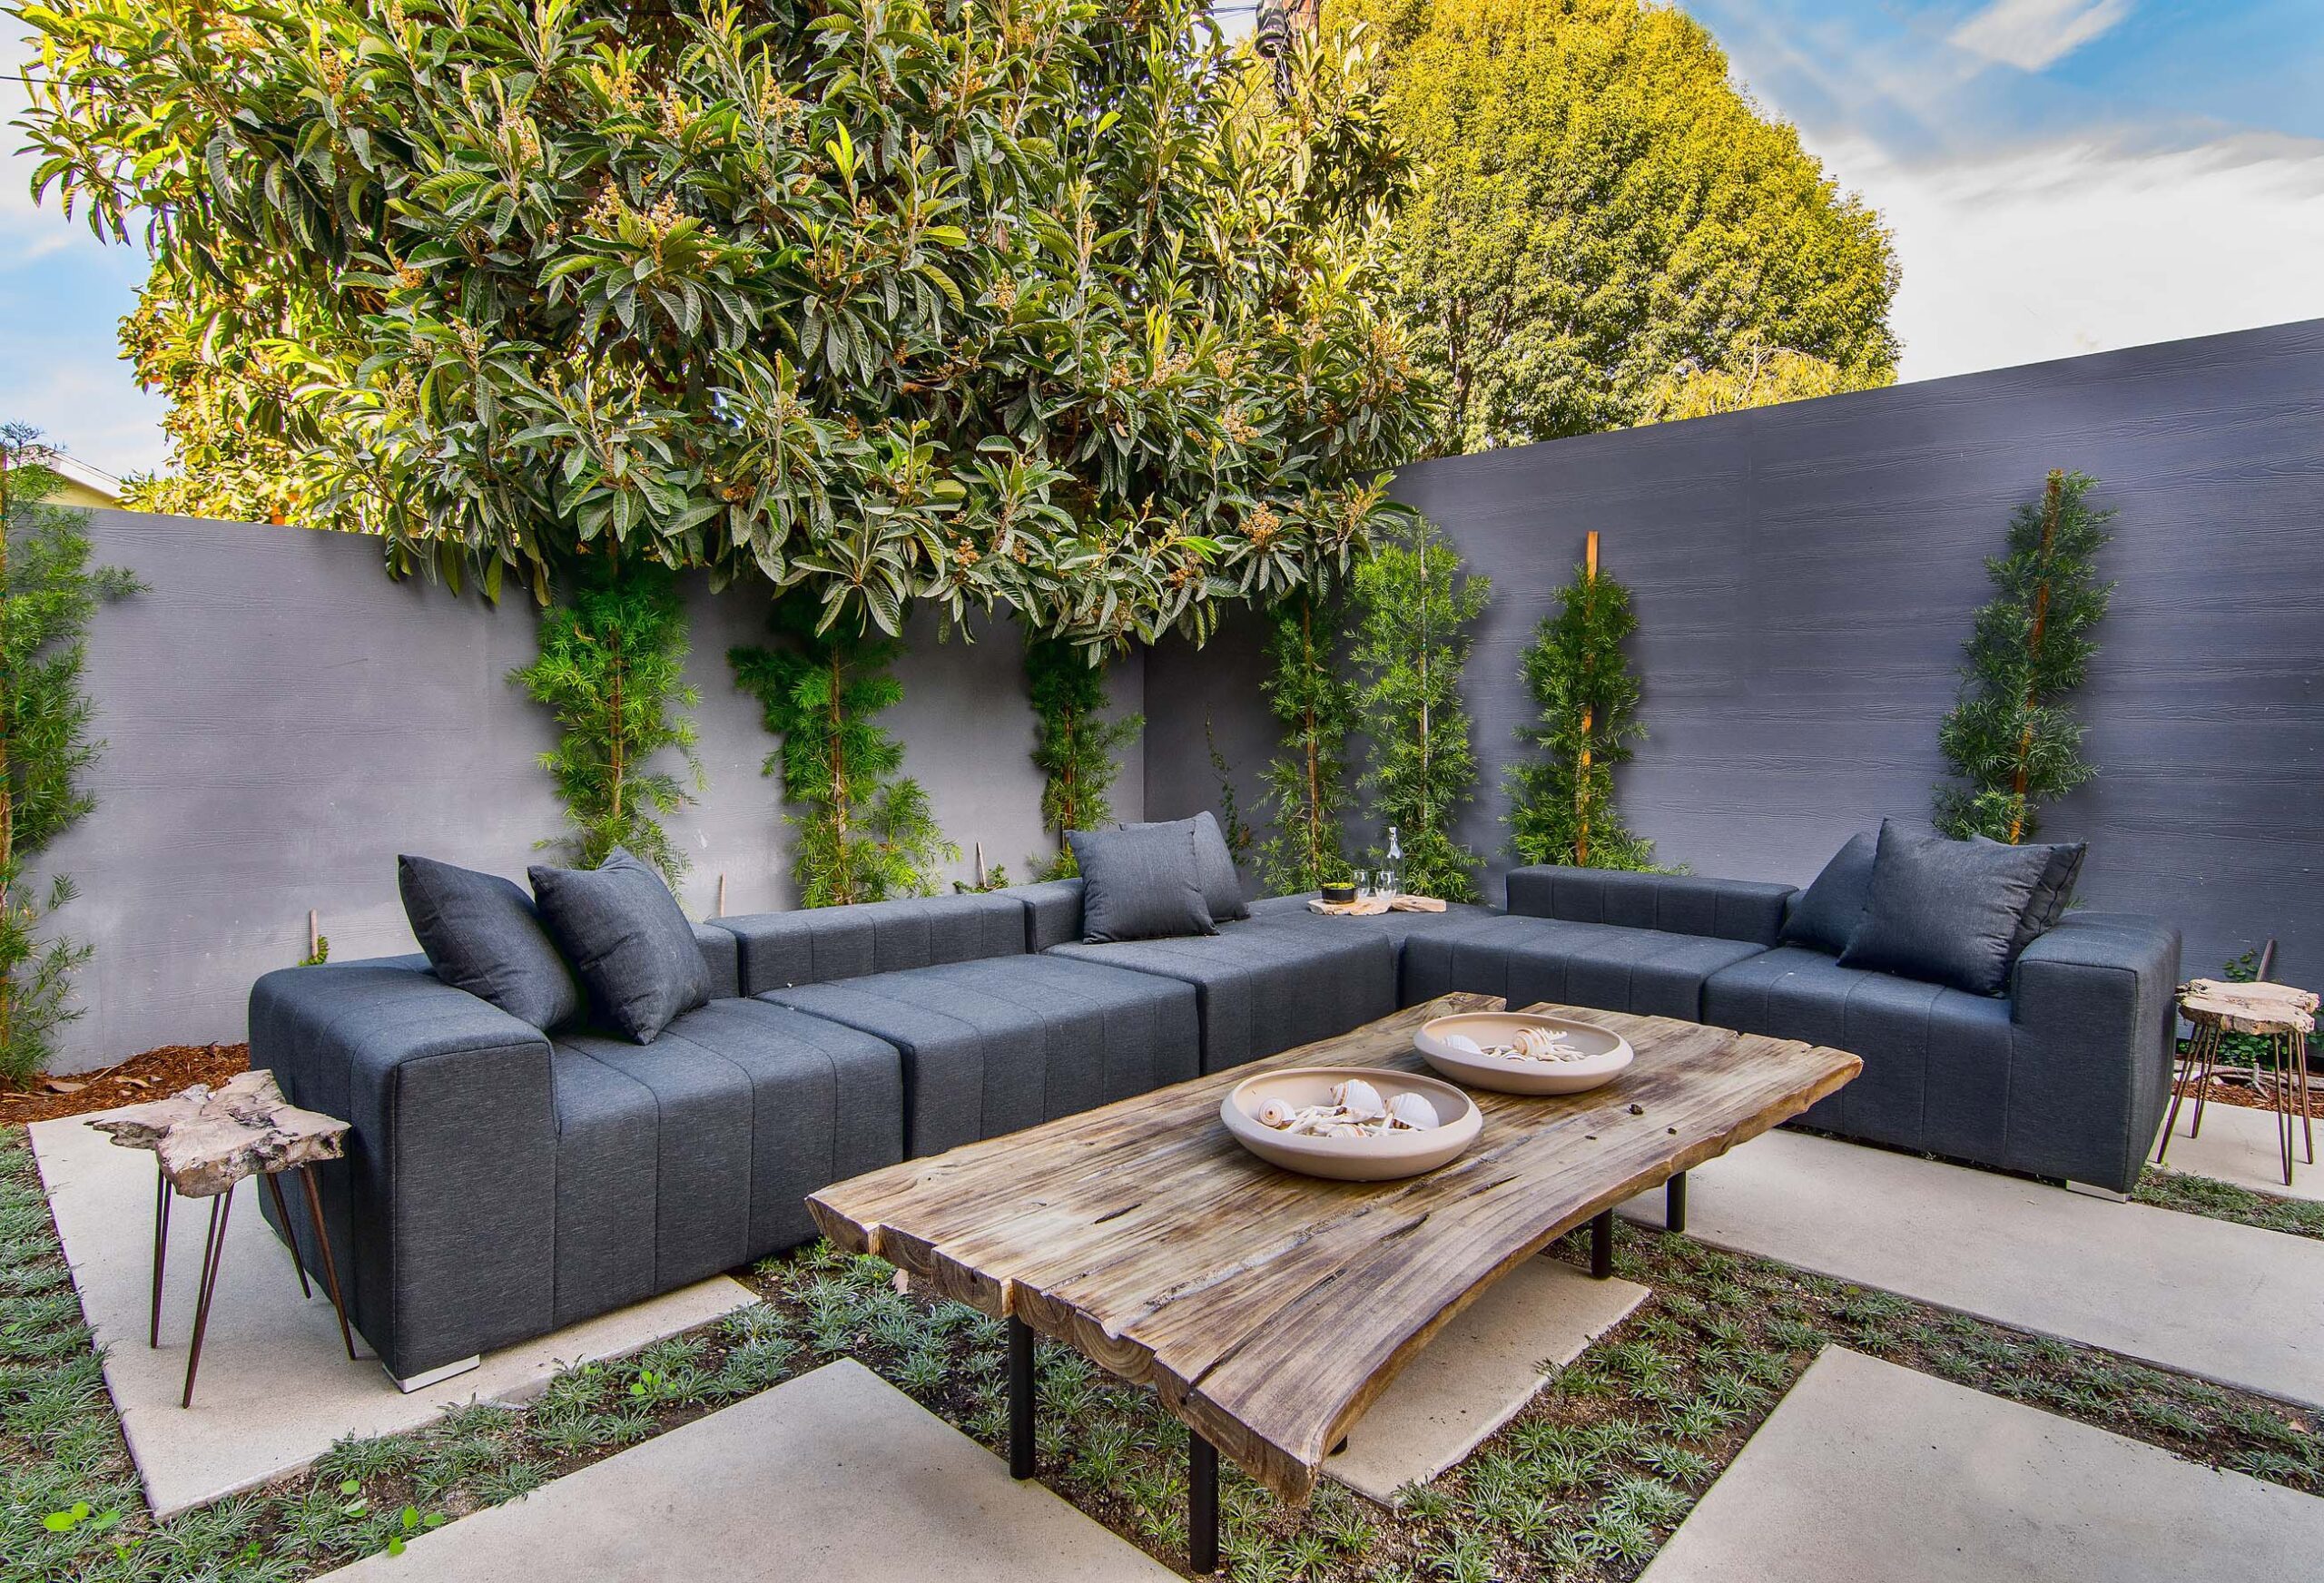 Outdoor lounge area in backyard of modern California home